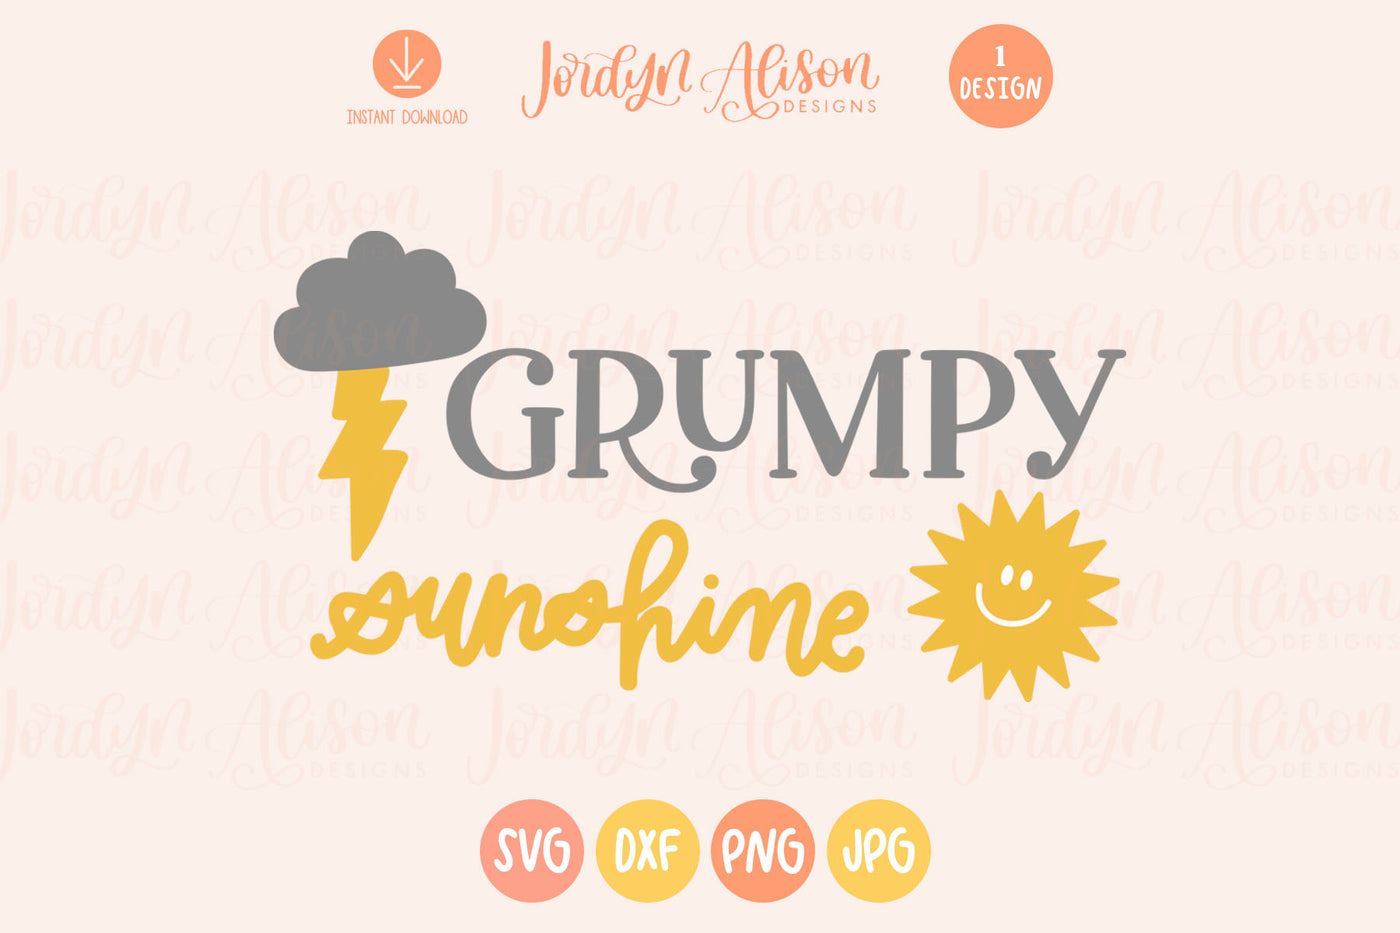 Grumpy Sunshine Trope SVG